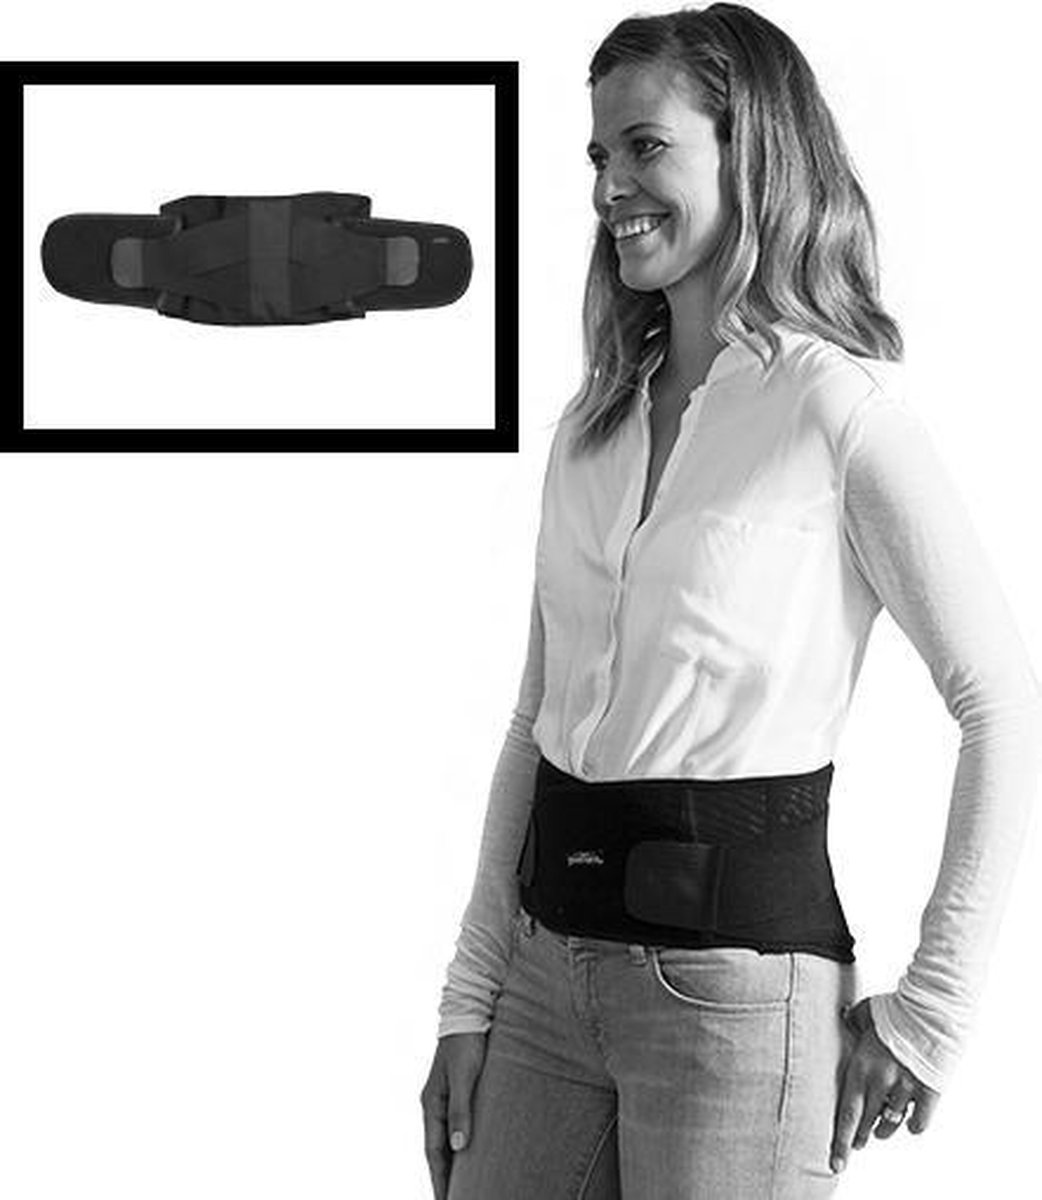 Swedish Posture - Stabilize Lumbar Back Belt - Black - Maat L